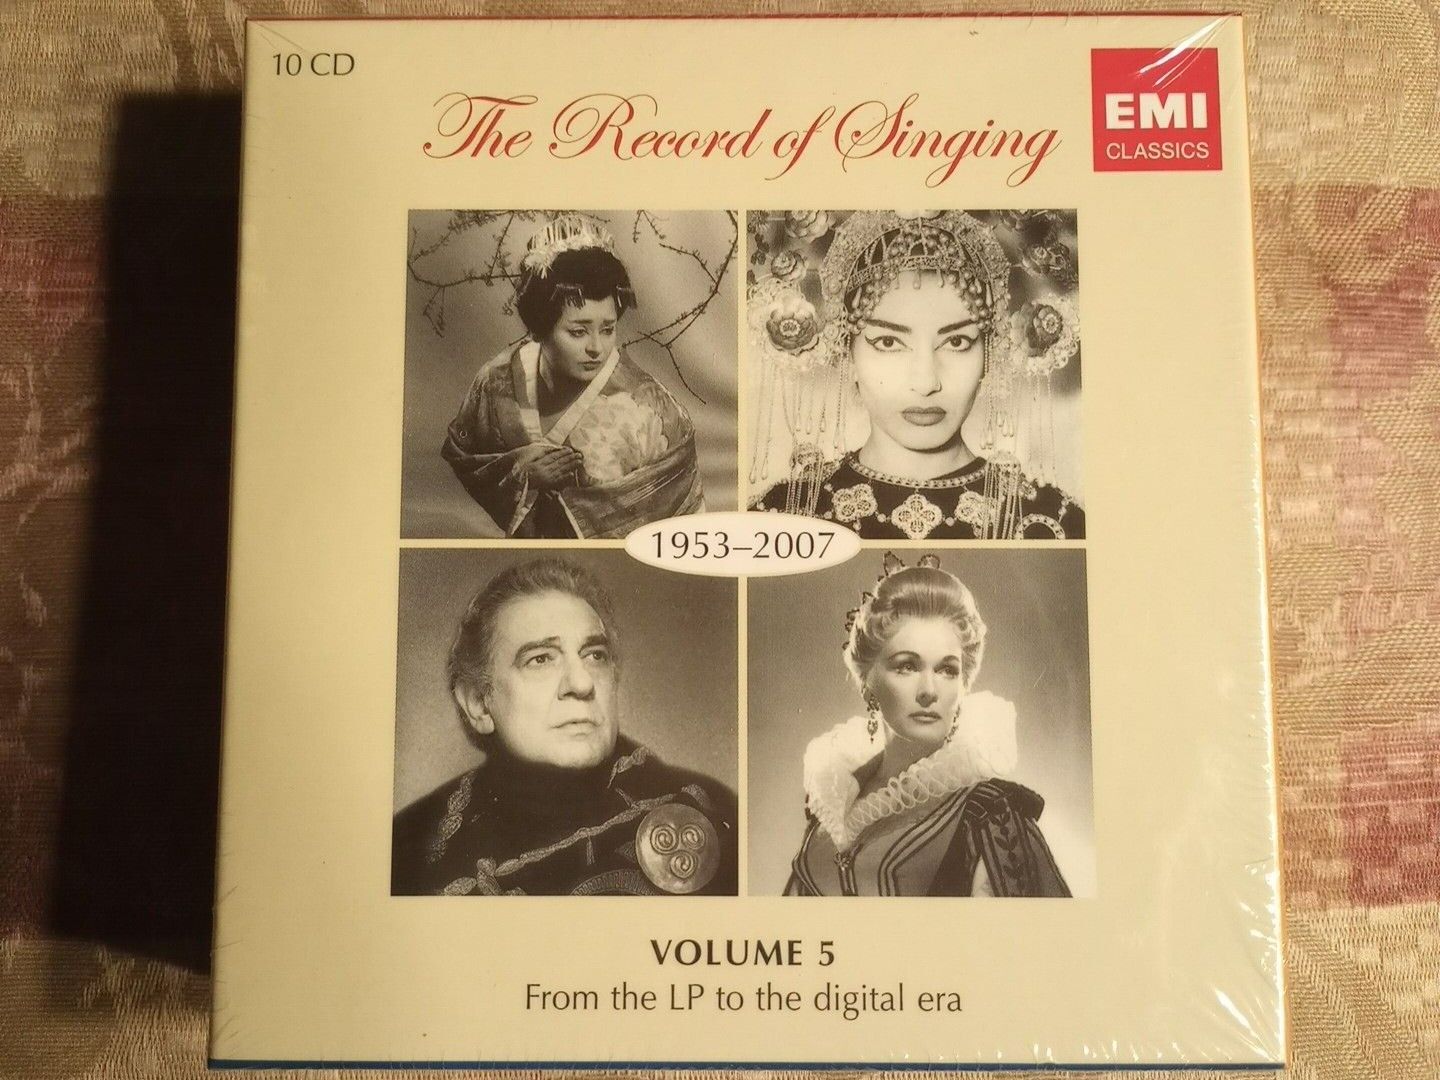 Richard Wagner+The Record of Singing~Vol 5(10 CDs) 1953~2007~EMI Classics~SEALED